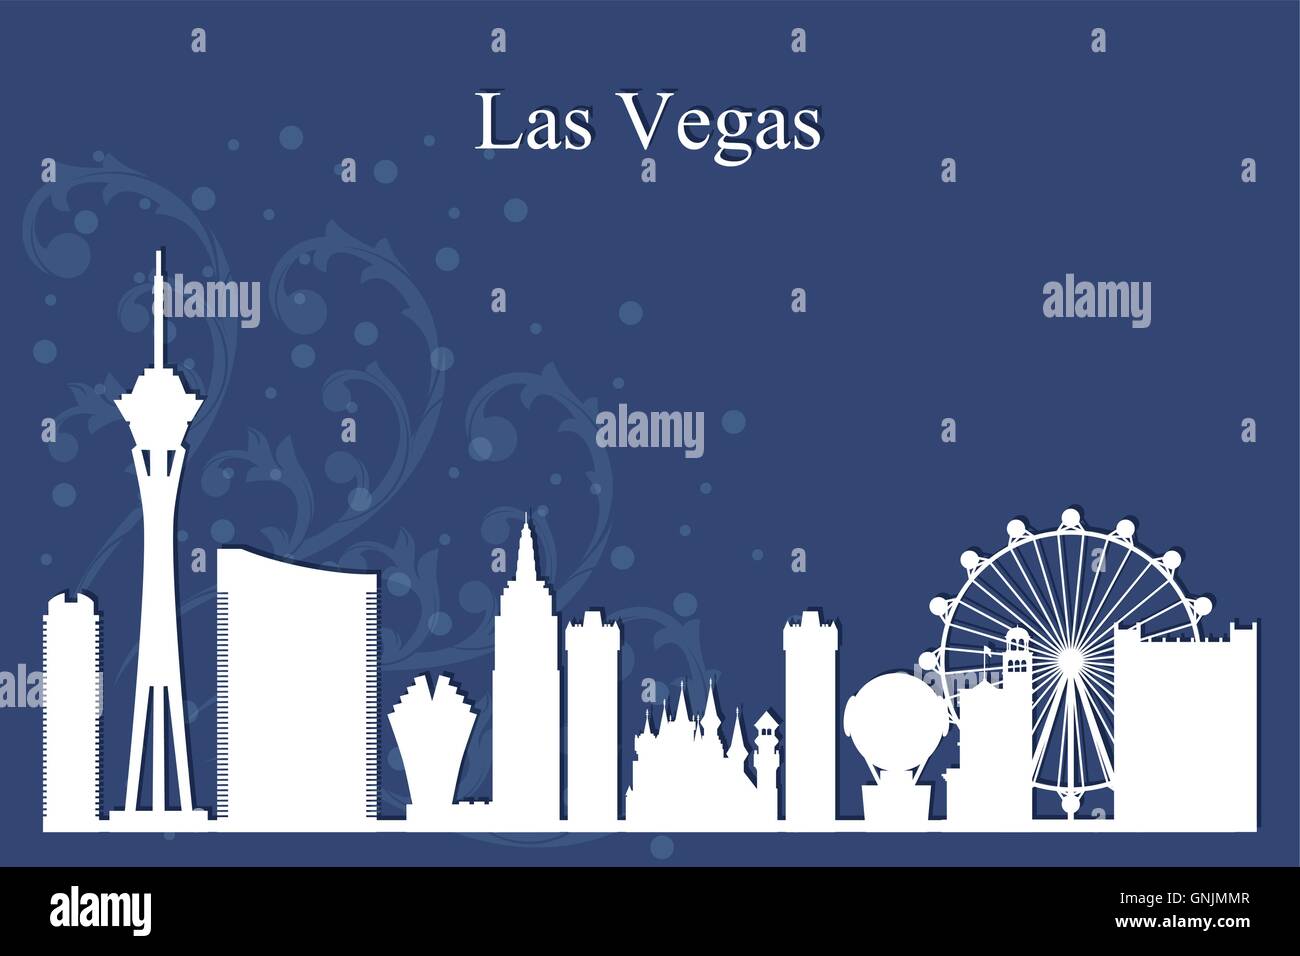 Las Vegas city skyline silhouette on blue background Stock Vector